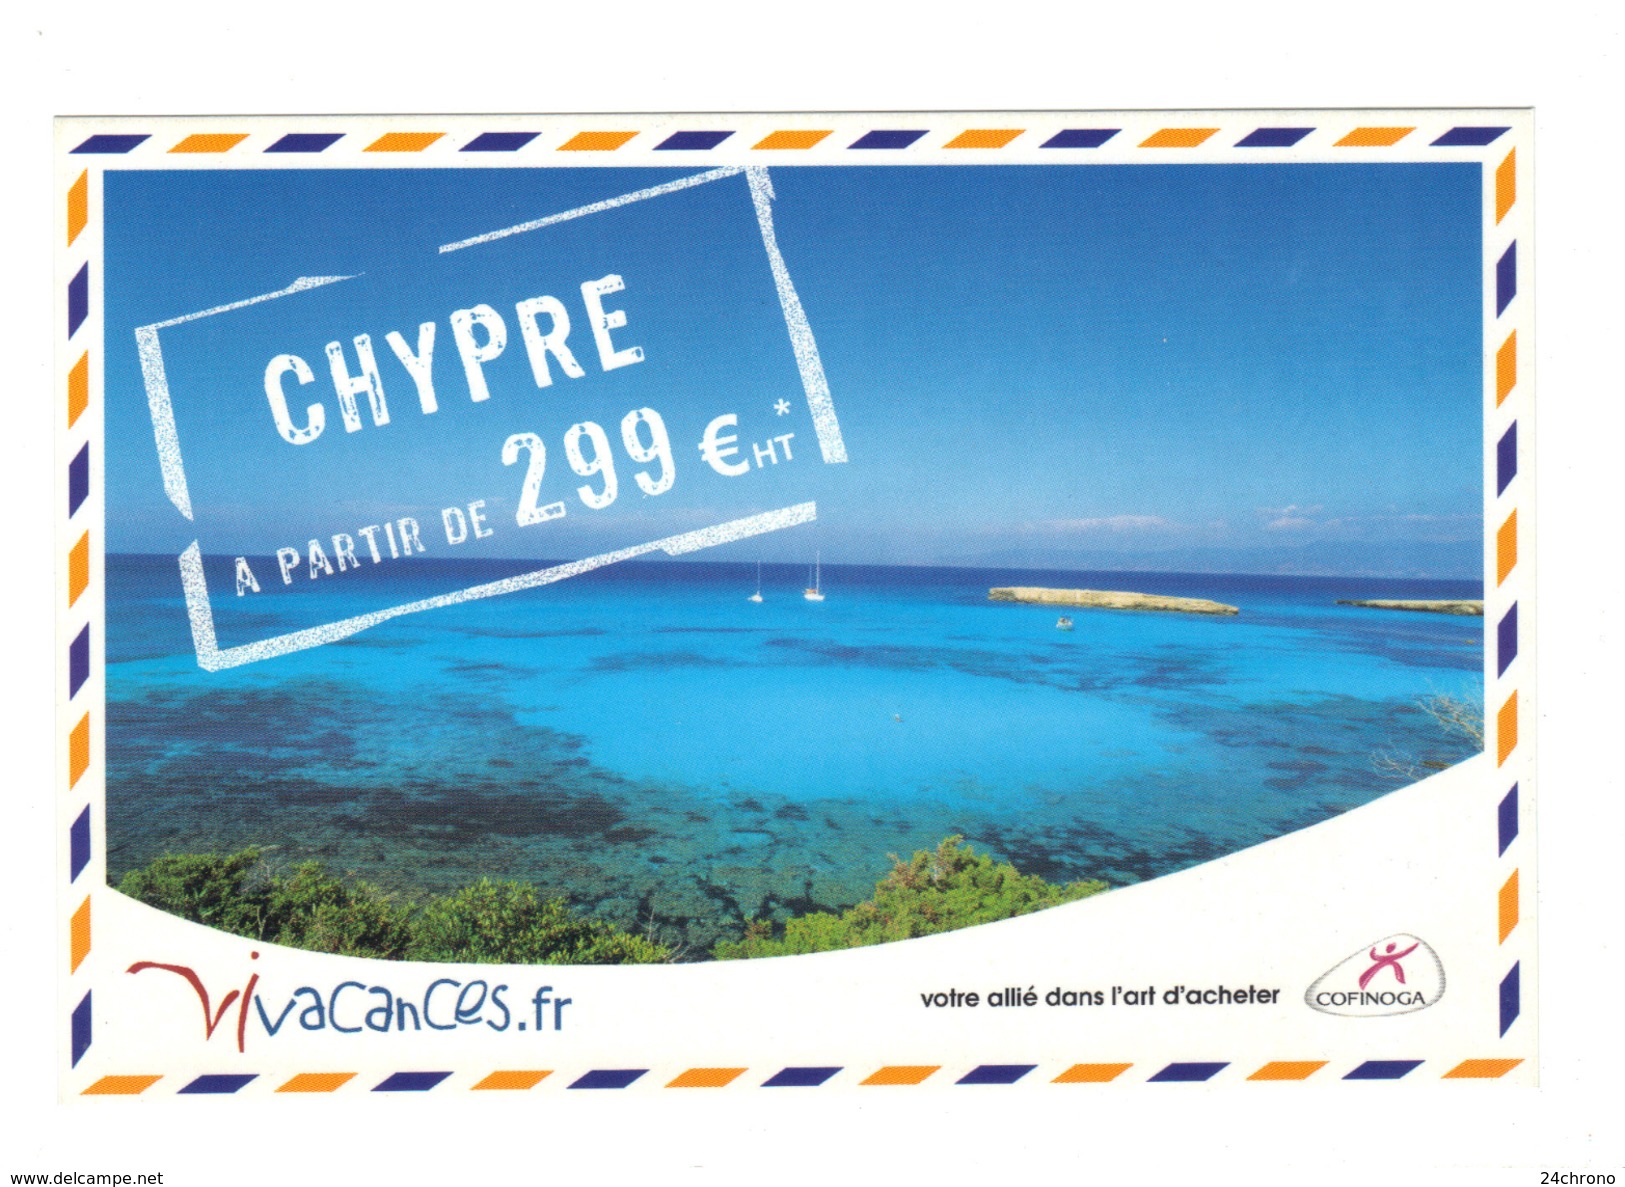 Chypre: Vivacances.fr (17-478) - Chypre